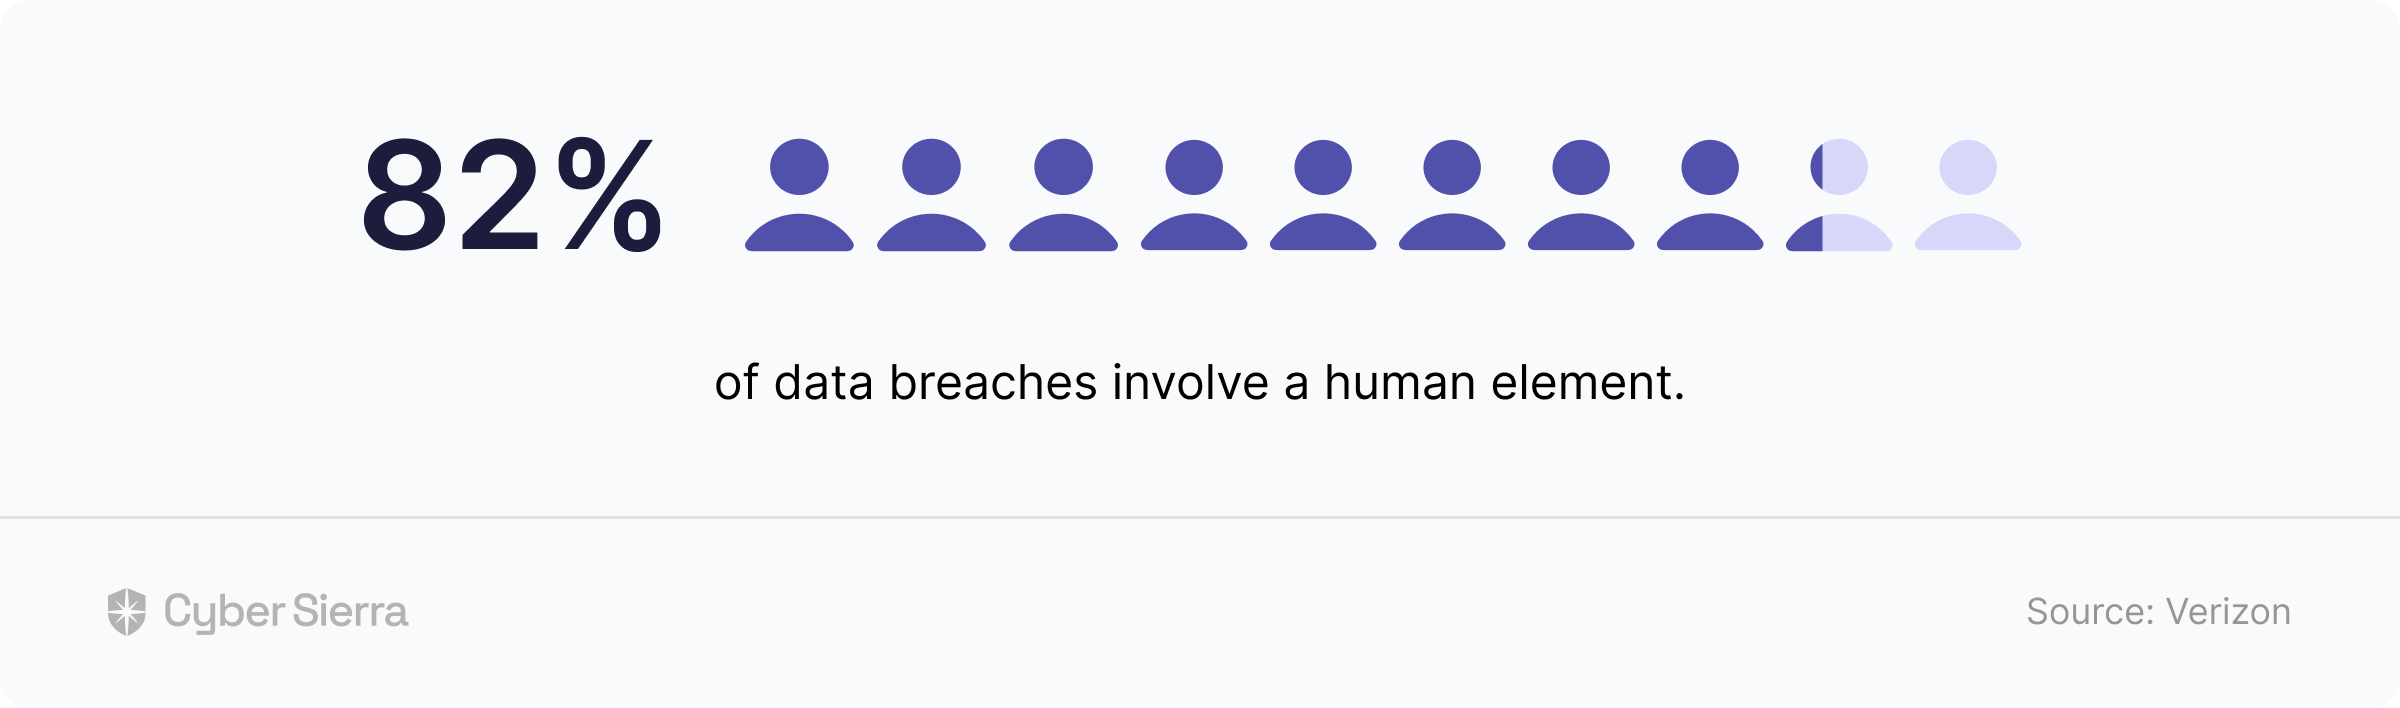 human element involve in data breach